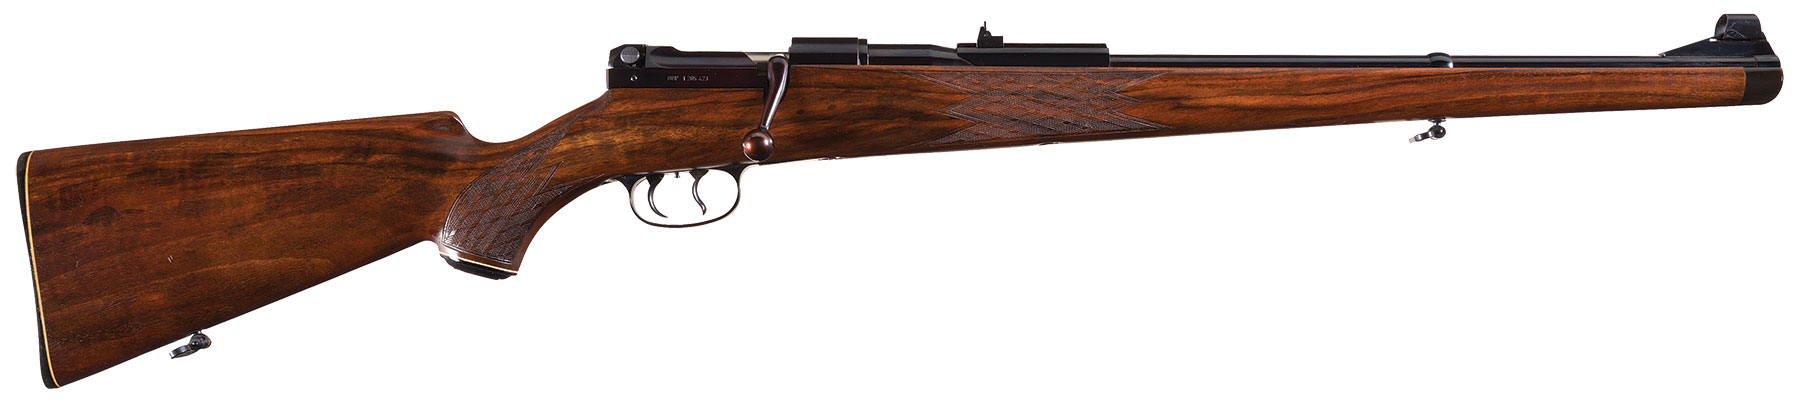 Mauser 66-Rifle Rifle 30-06 Springfield.